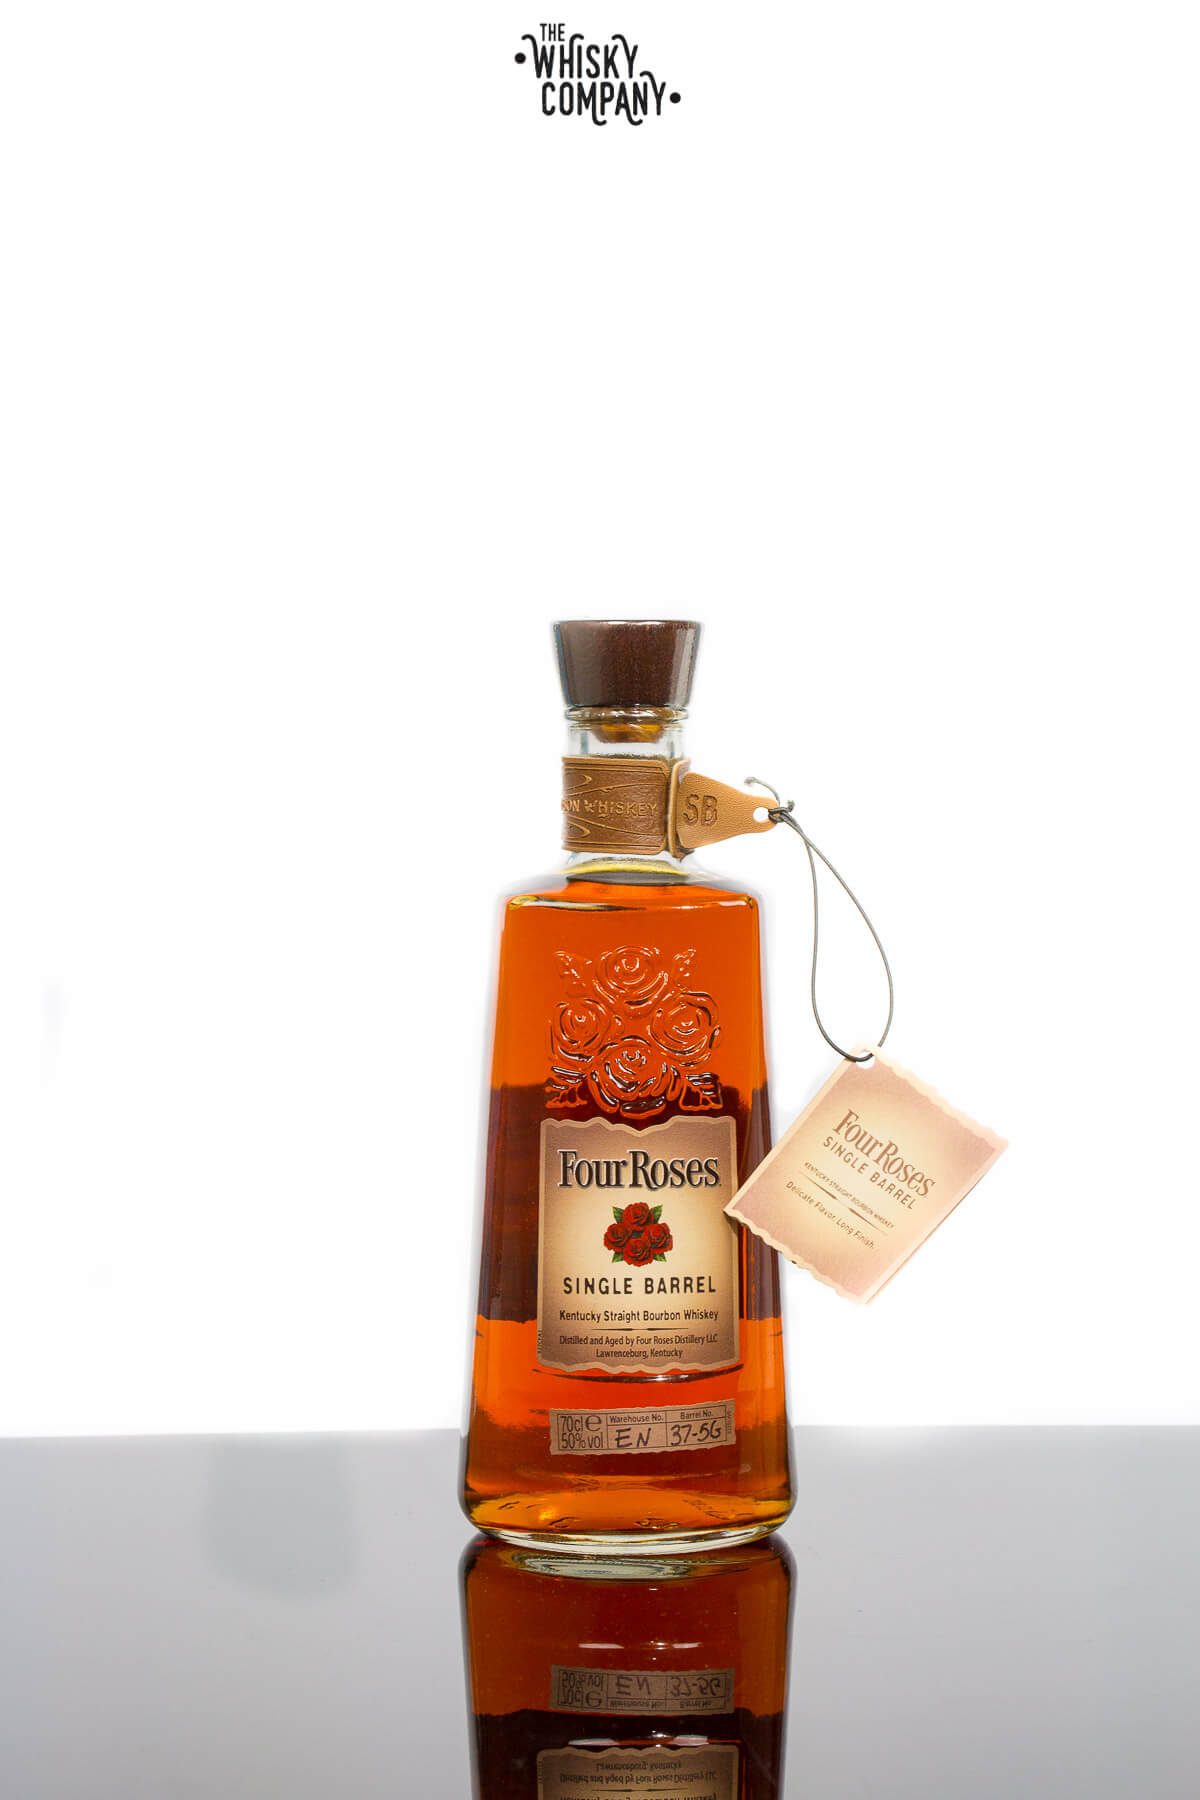 Four Roses Kentucky Bourbon Whiskey The Whisky Company